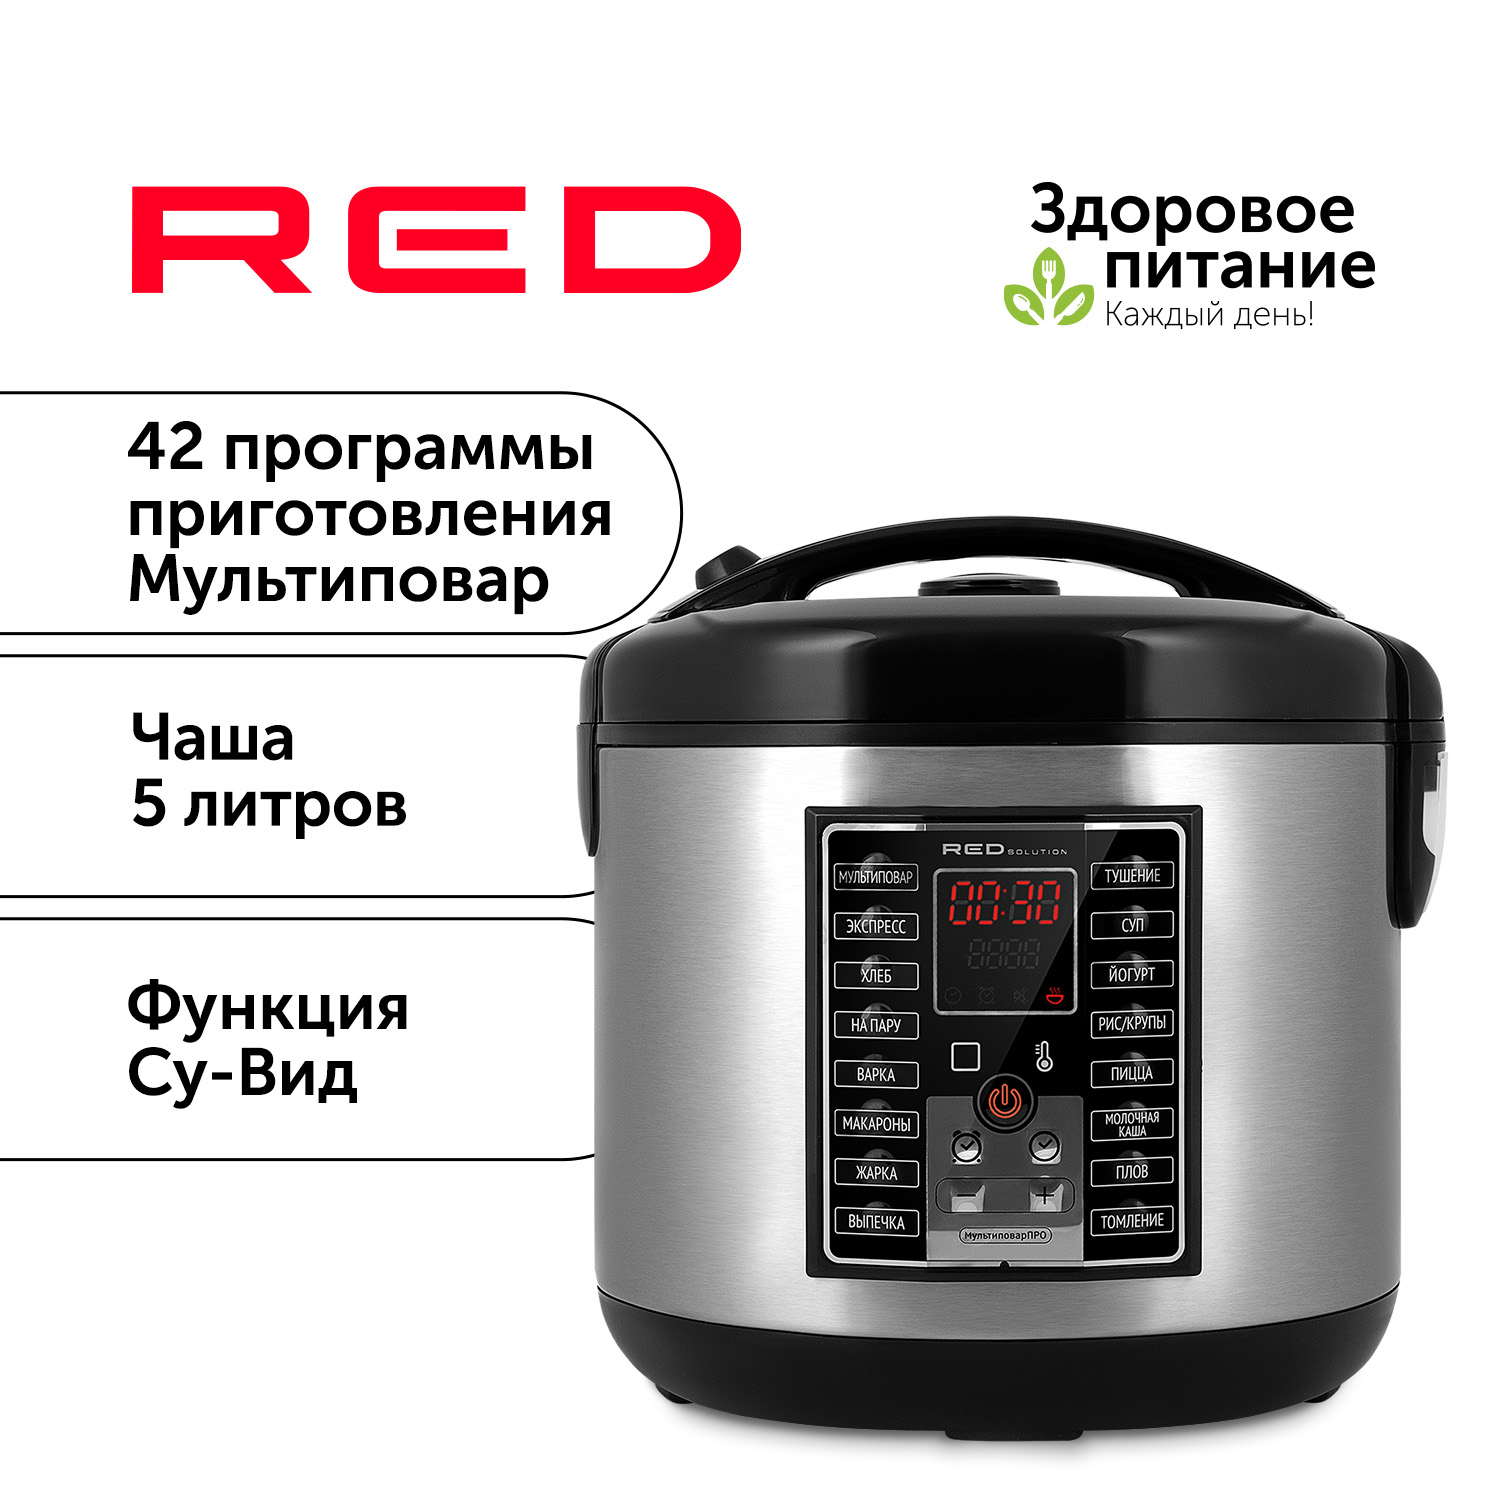 Мультиварка RED SOLUTION RMC-M25 серебристый, черный мультиварка red solution rmc m251 черная